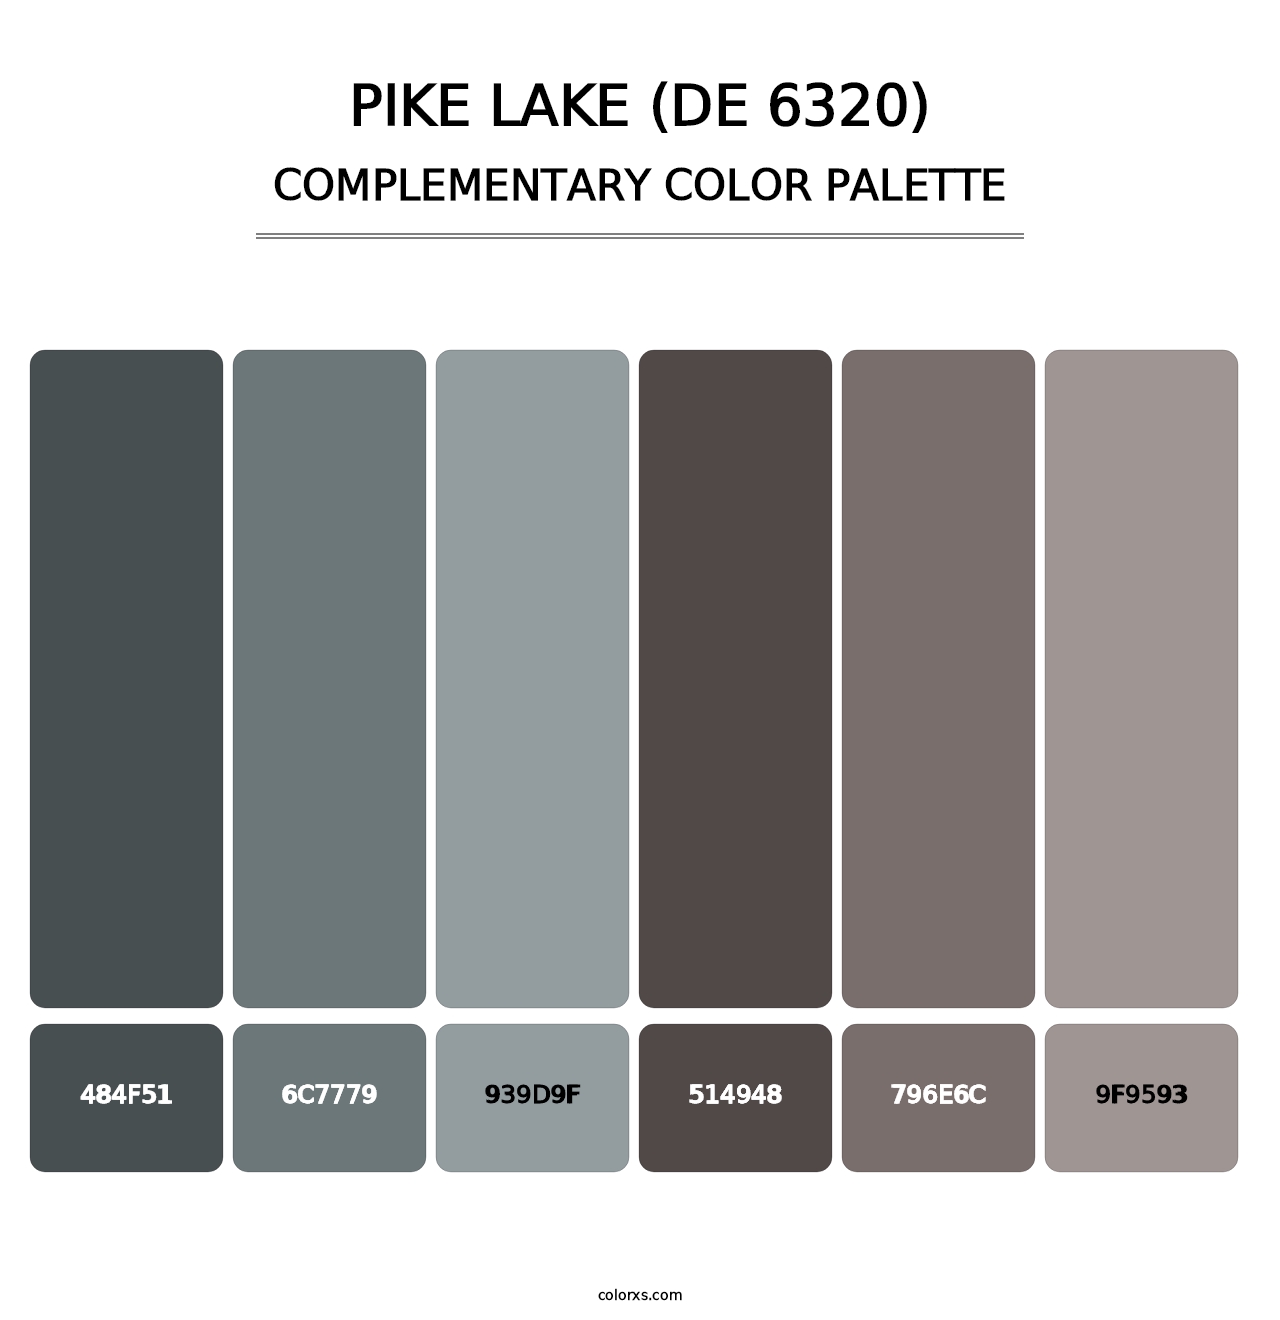 Pike Lake (DE 6320) - Complementary Color Palette